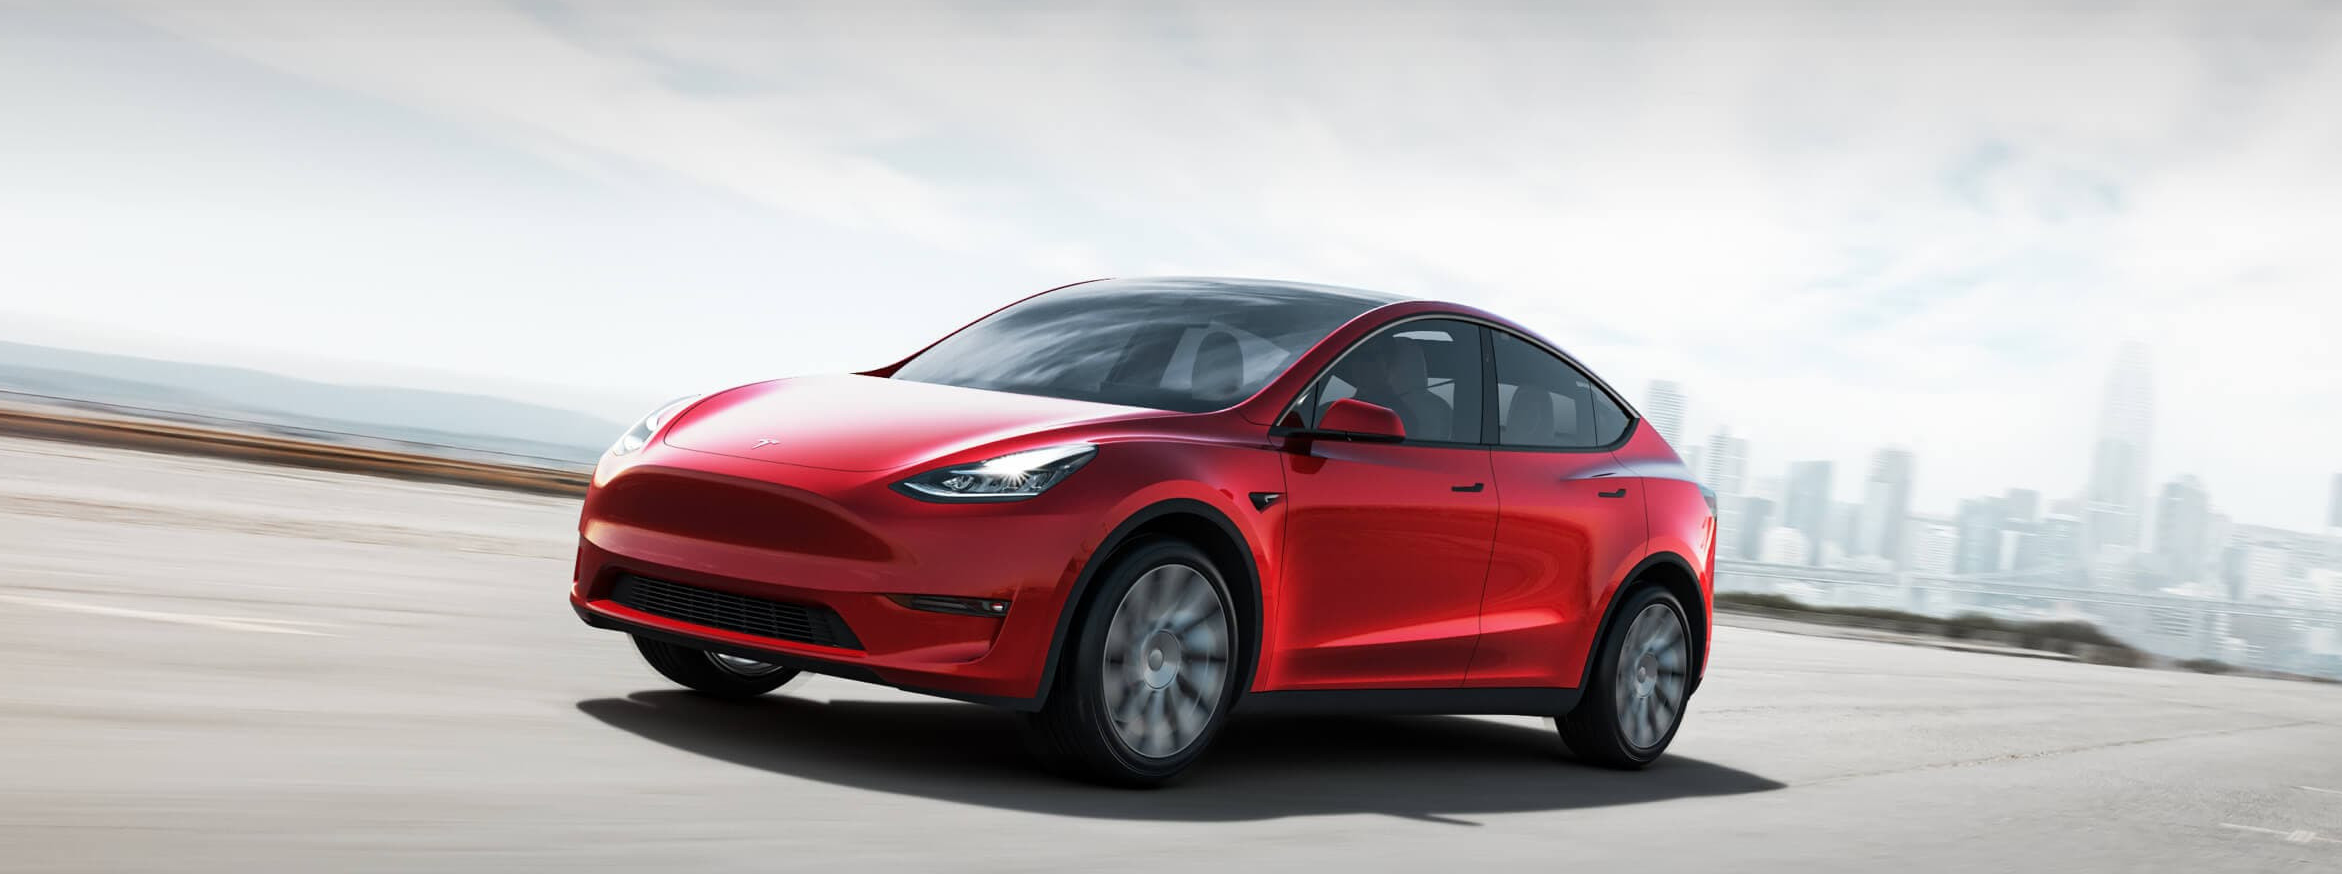 33.99-36.99 million yuan, Tesla Model Y price announced.